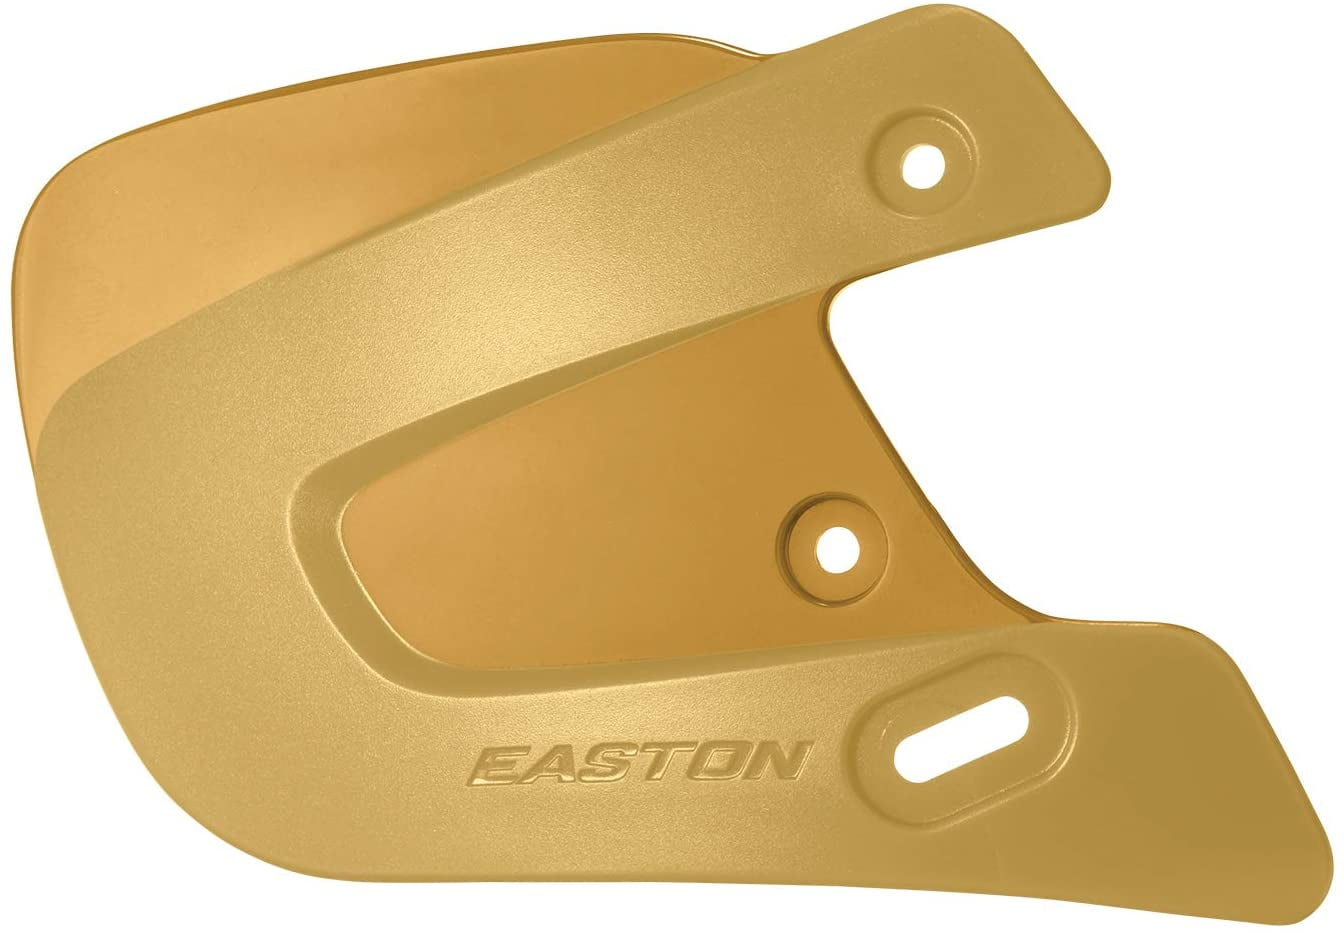 Easton Helmet Extended Jaw Guard